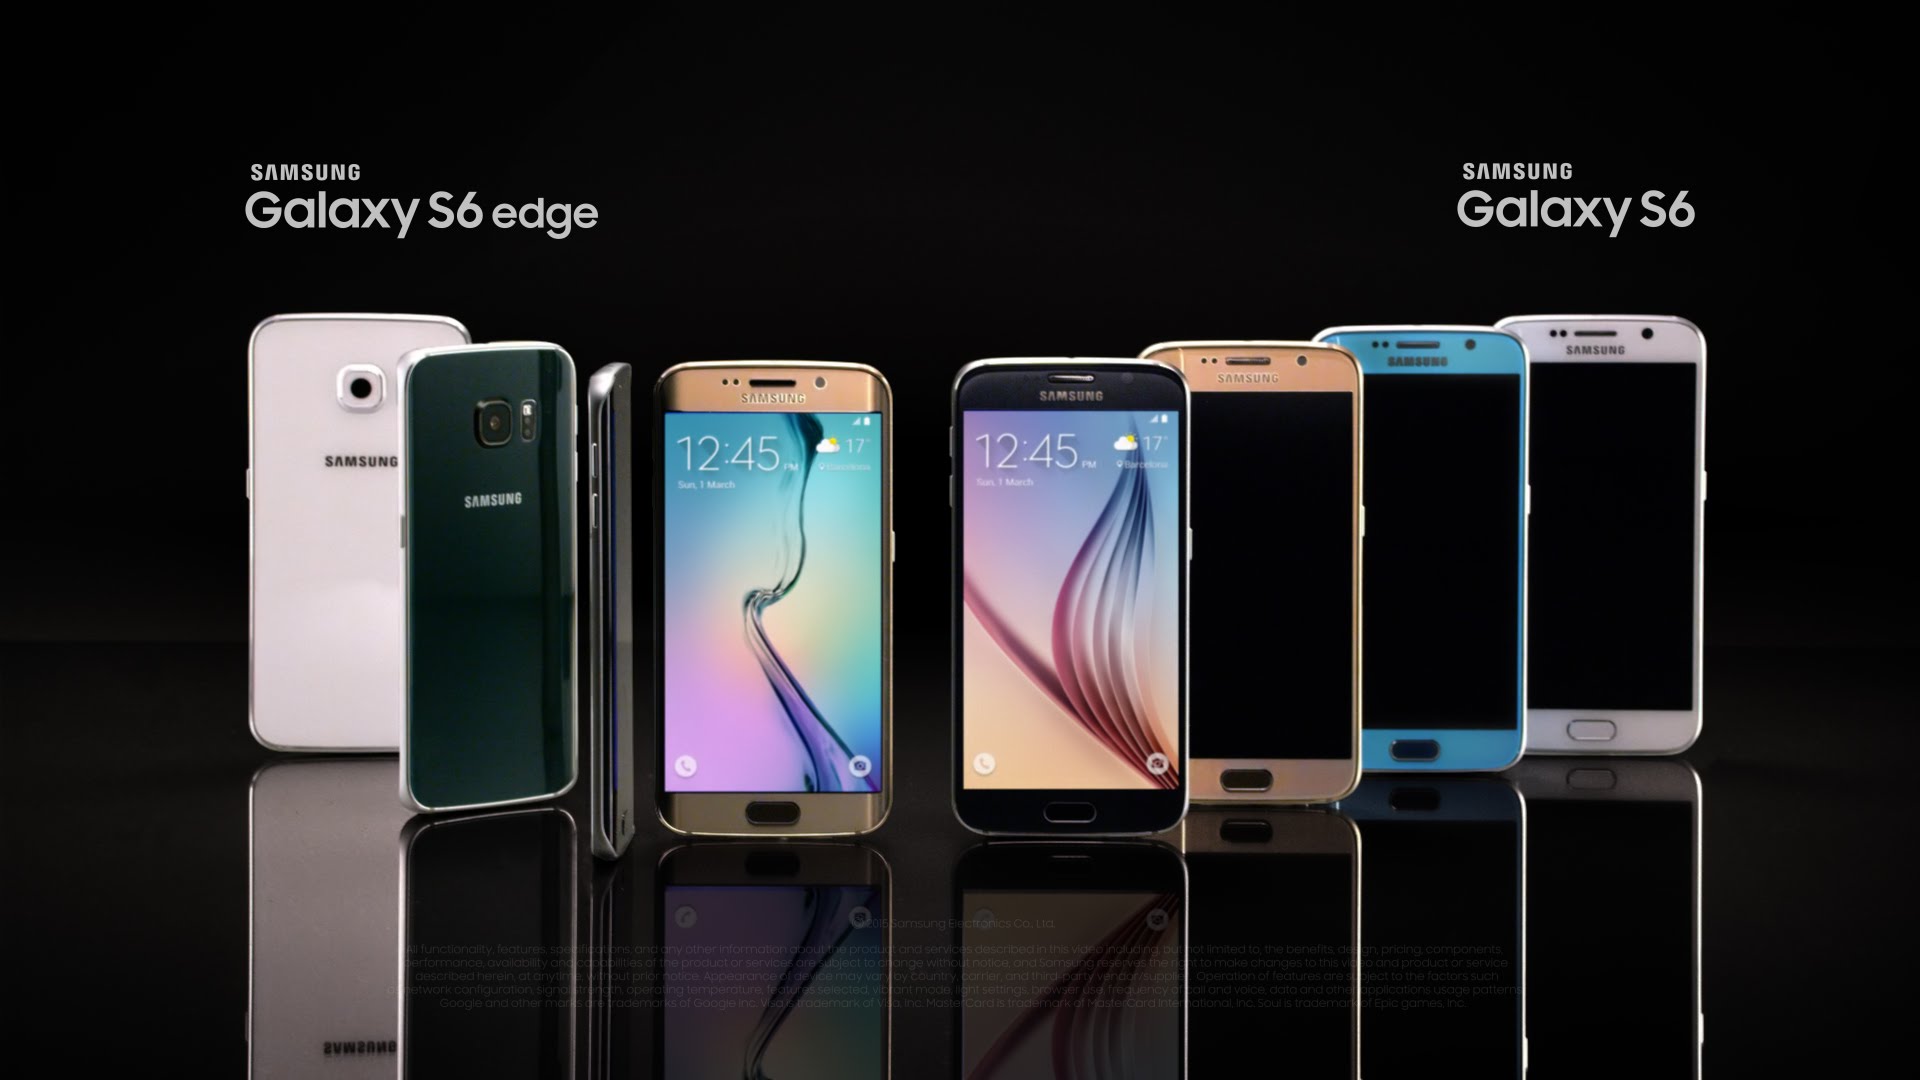 fond d'écran samsung galaxy s6 edge,téléphone portable,gadget,téléphone intelligent,dispositif de communication,dispositif de communication portable